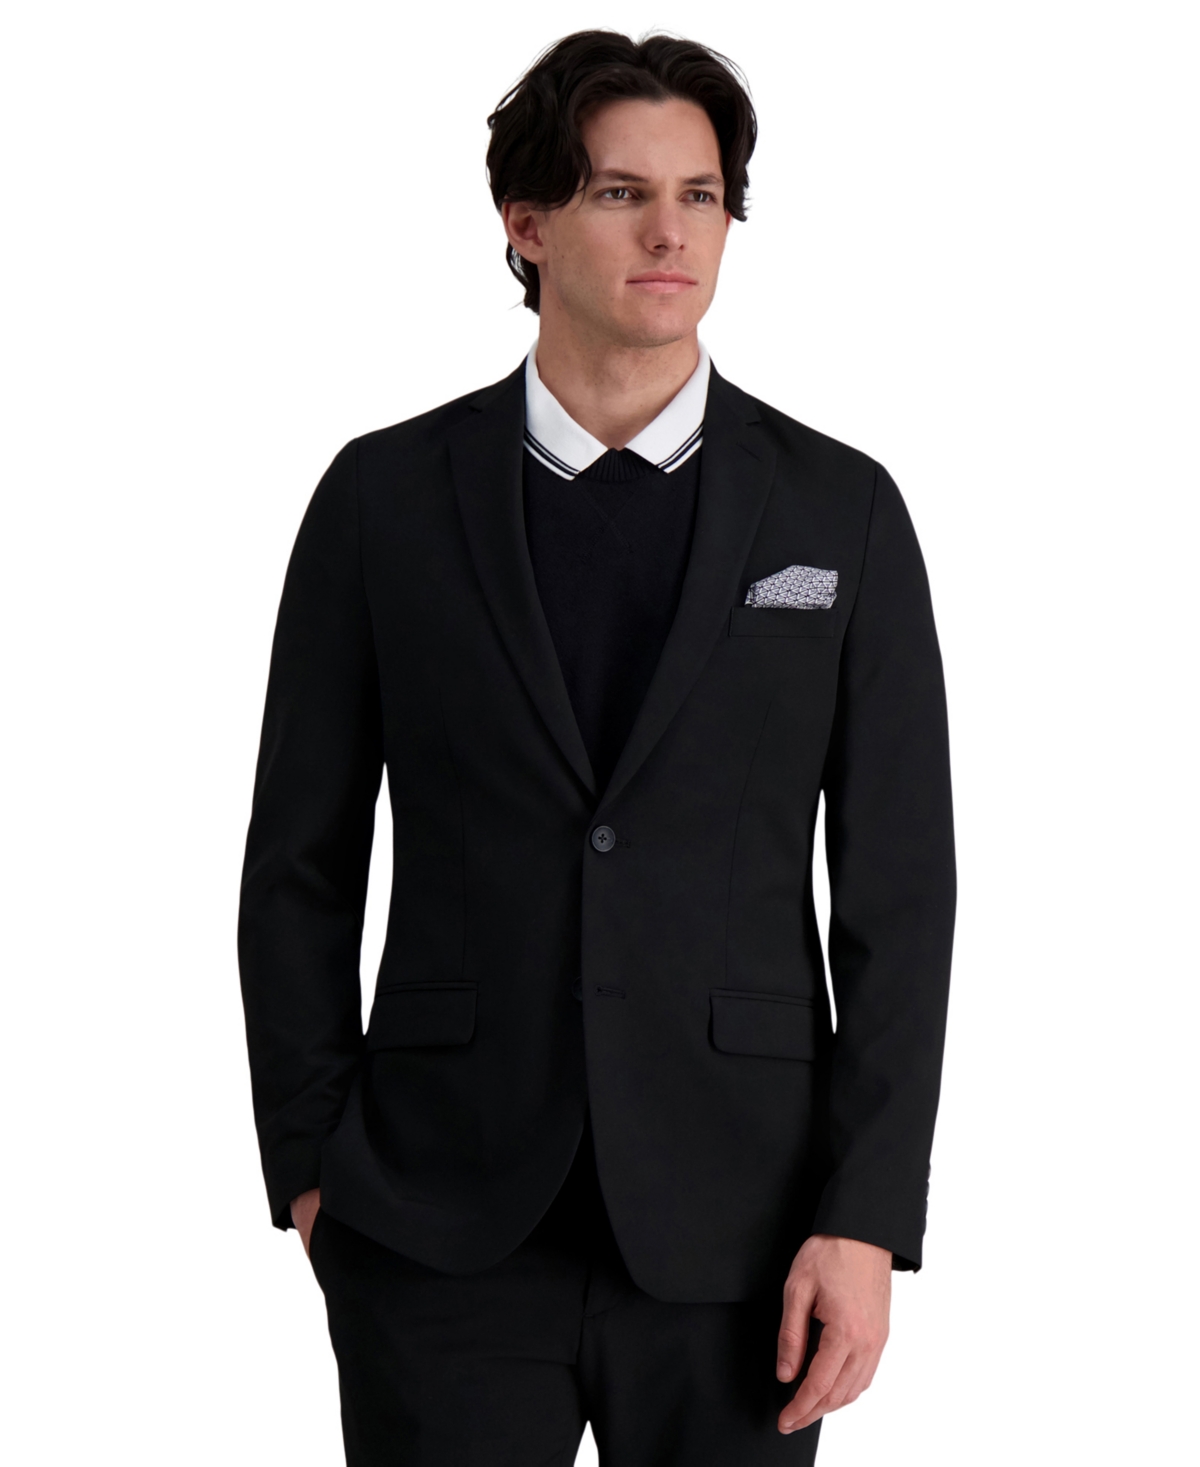 J.m. Haggar Men's 4-Way Stretch Plain Weave Ultra Slim Fit Suit Jacket - Black